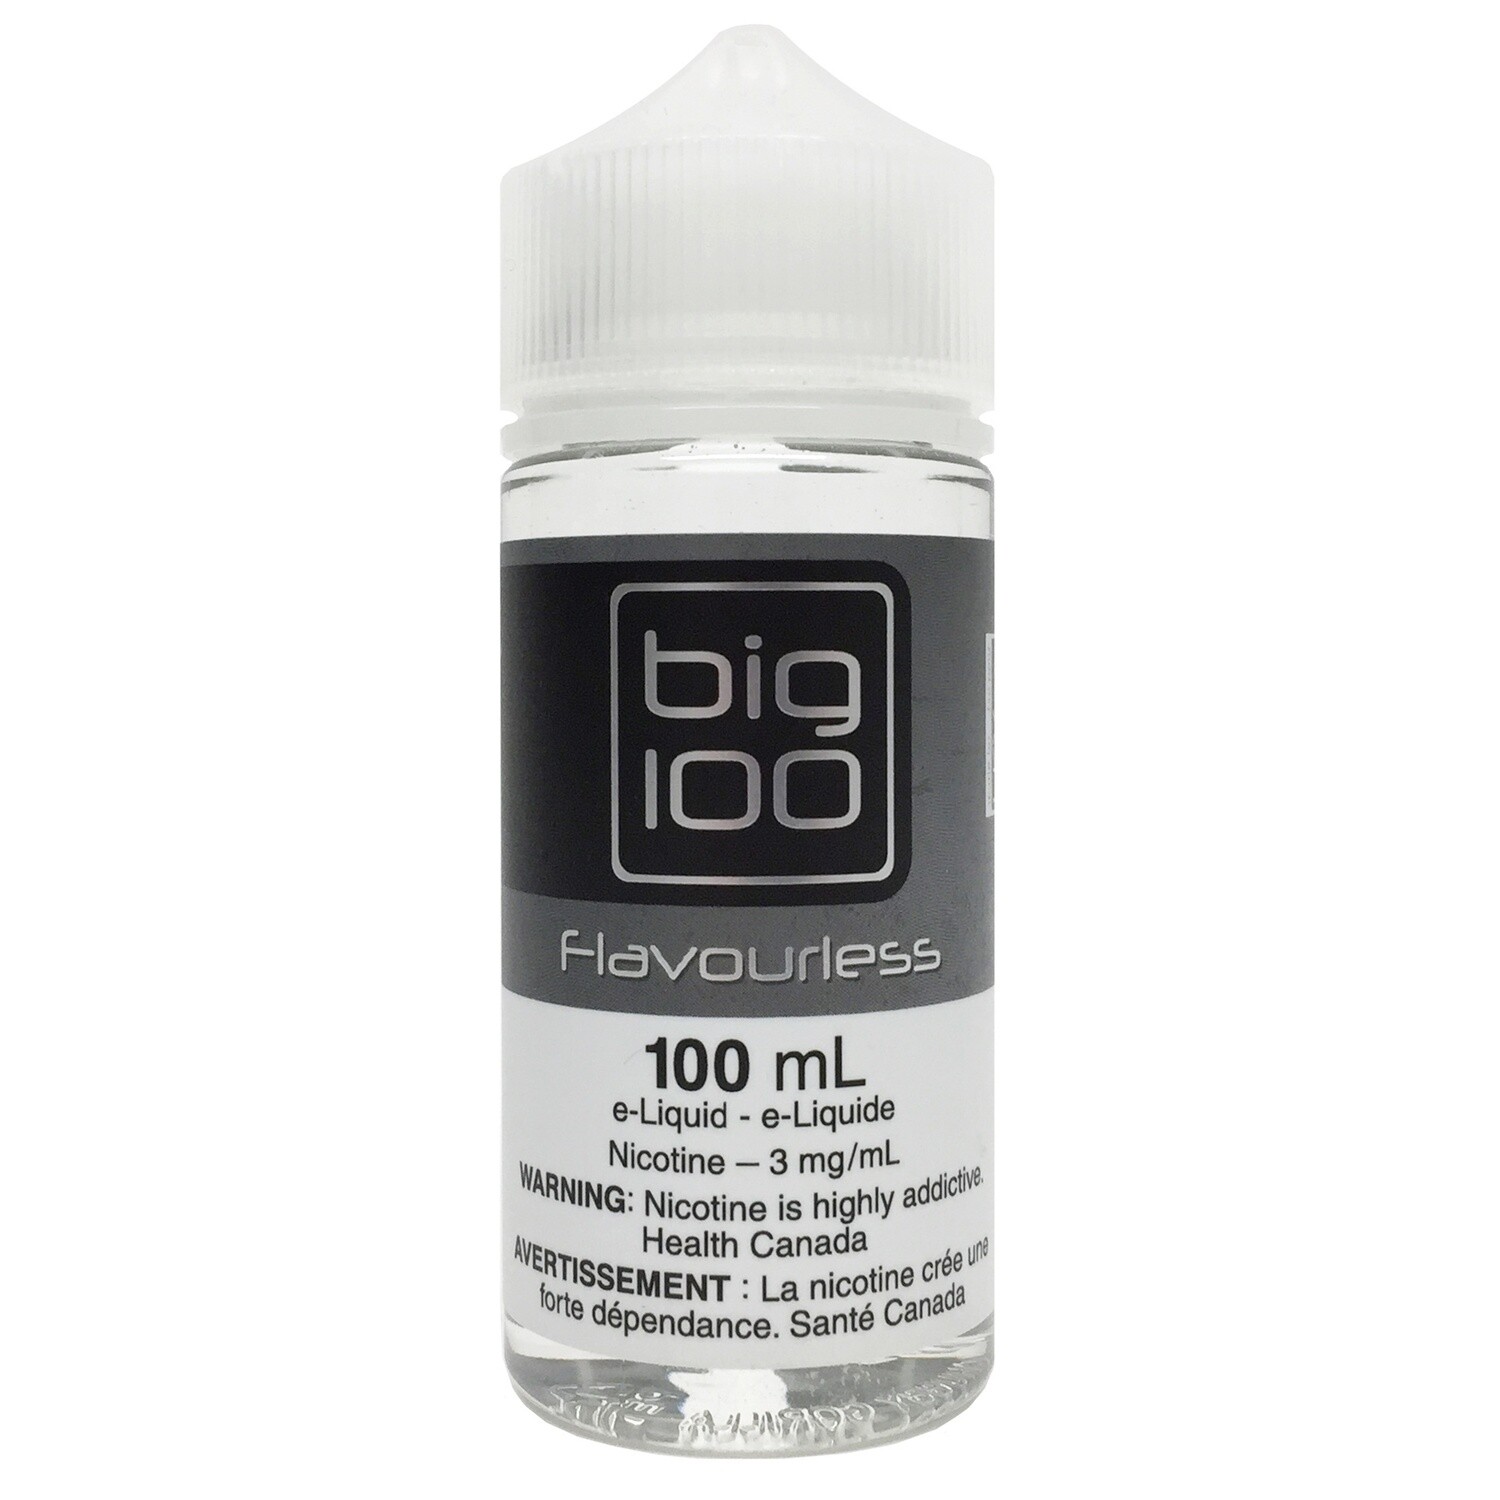 BIG 100 - Flavorless (100ml) Eliquid